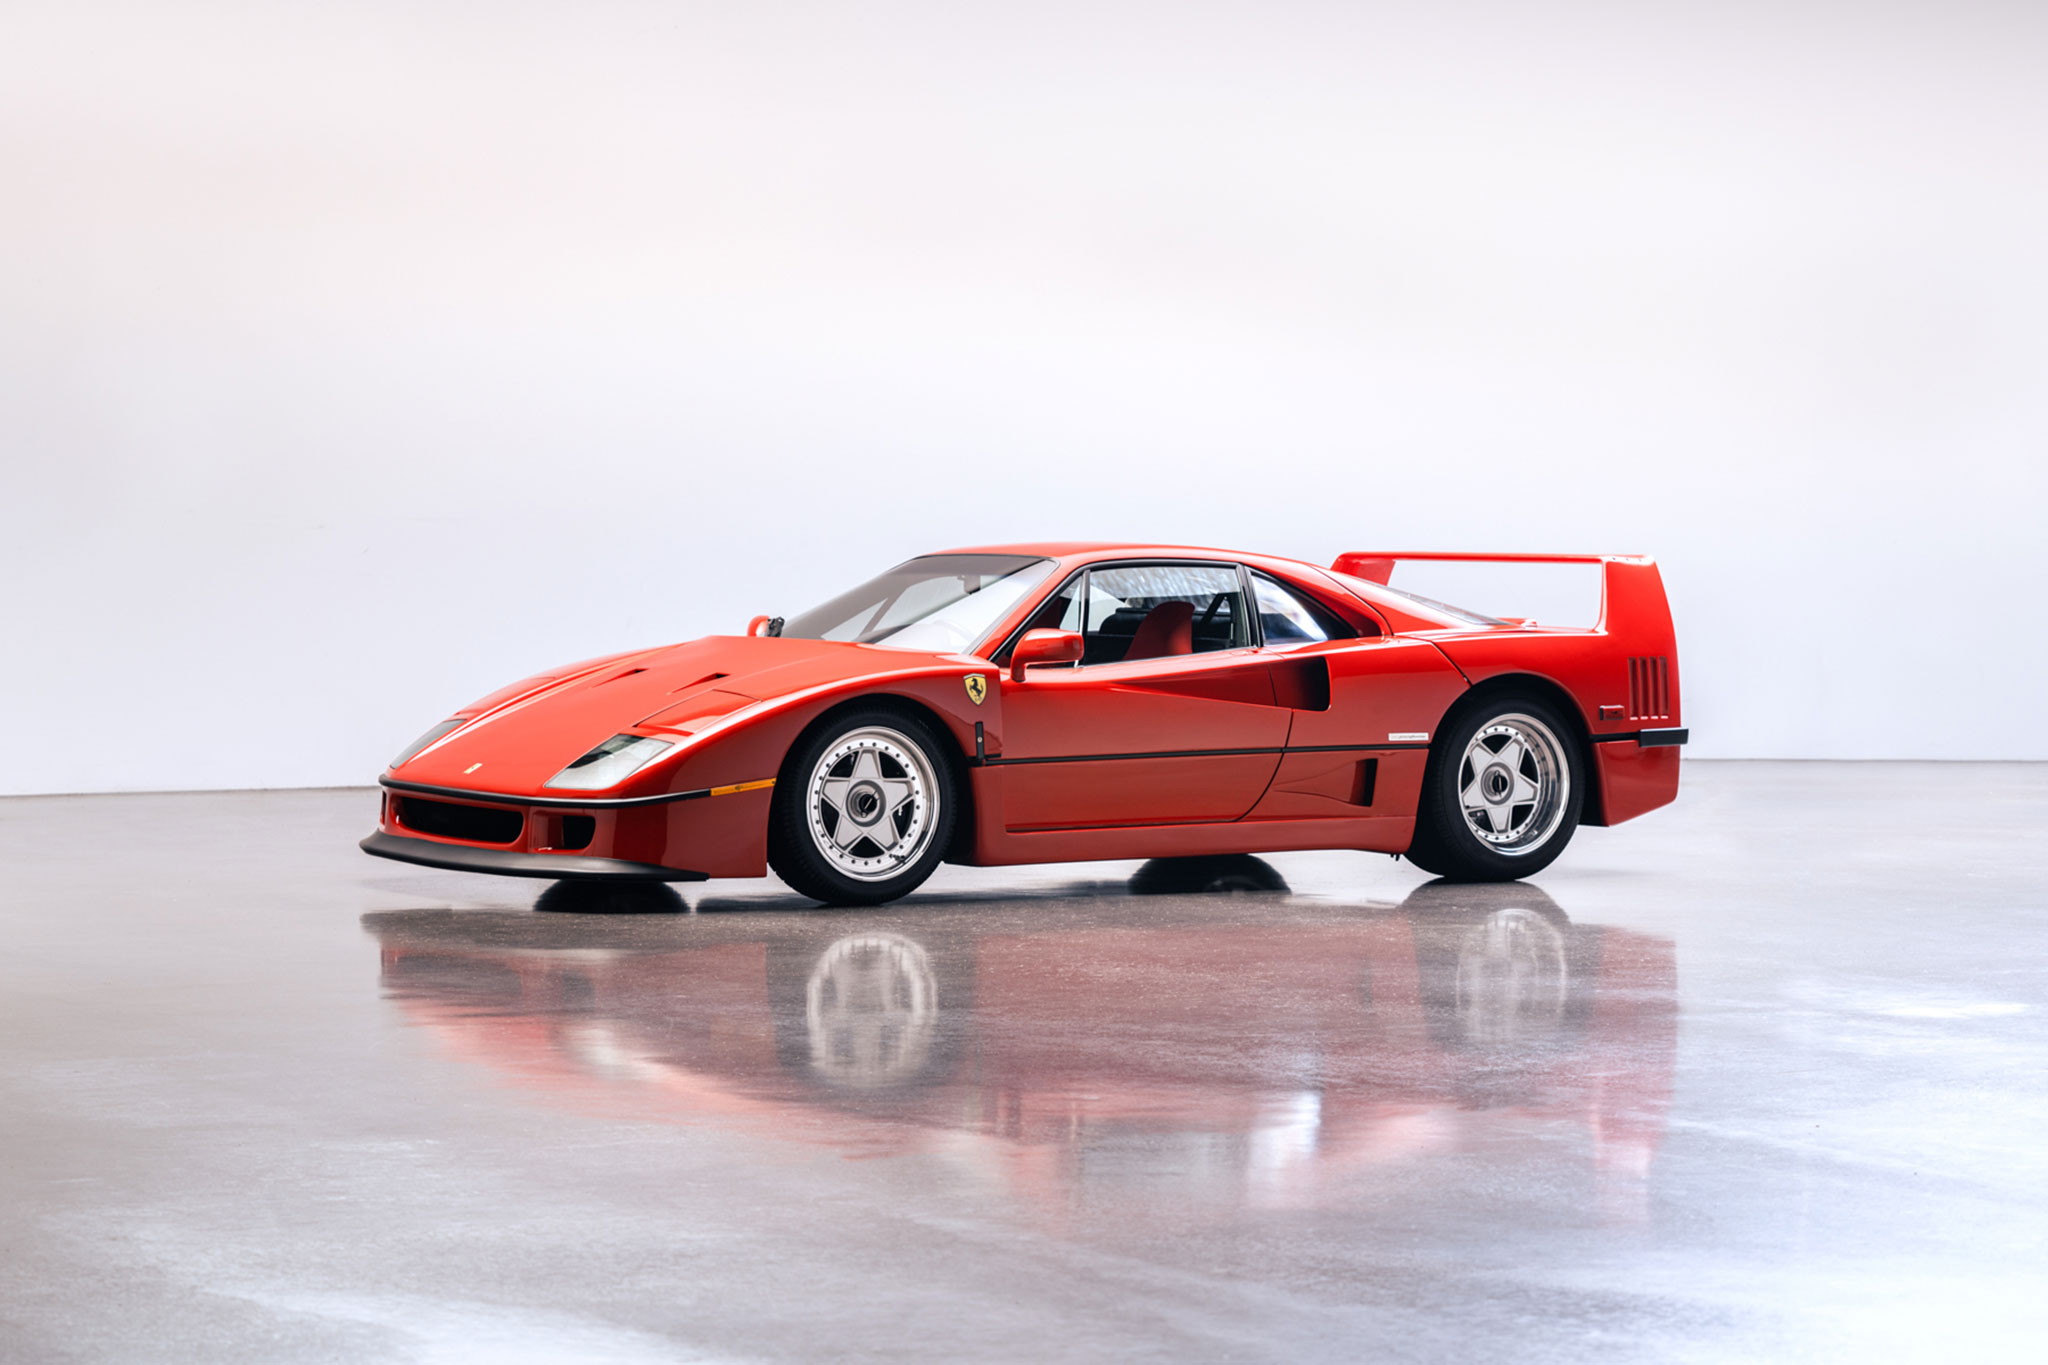 1990 Ferrari F40 - estimation $US 2.75 à 3.25 millions - Pebble Beach Gooding & Company.